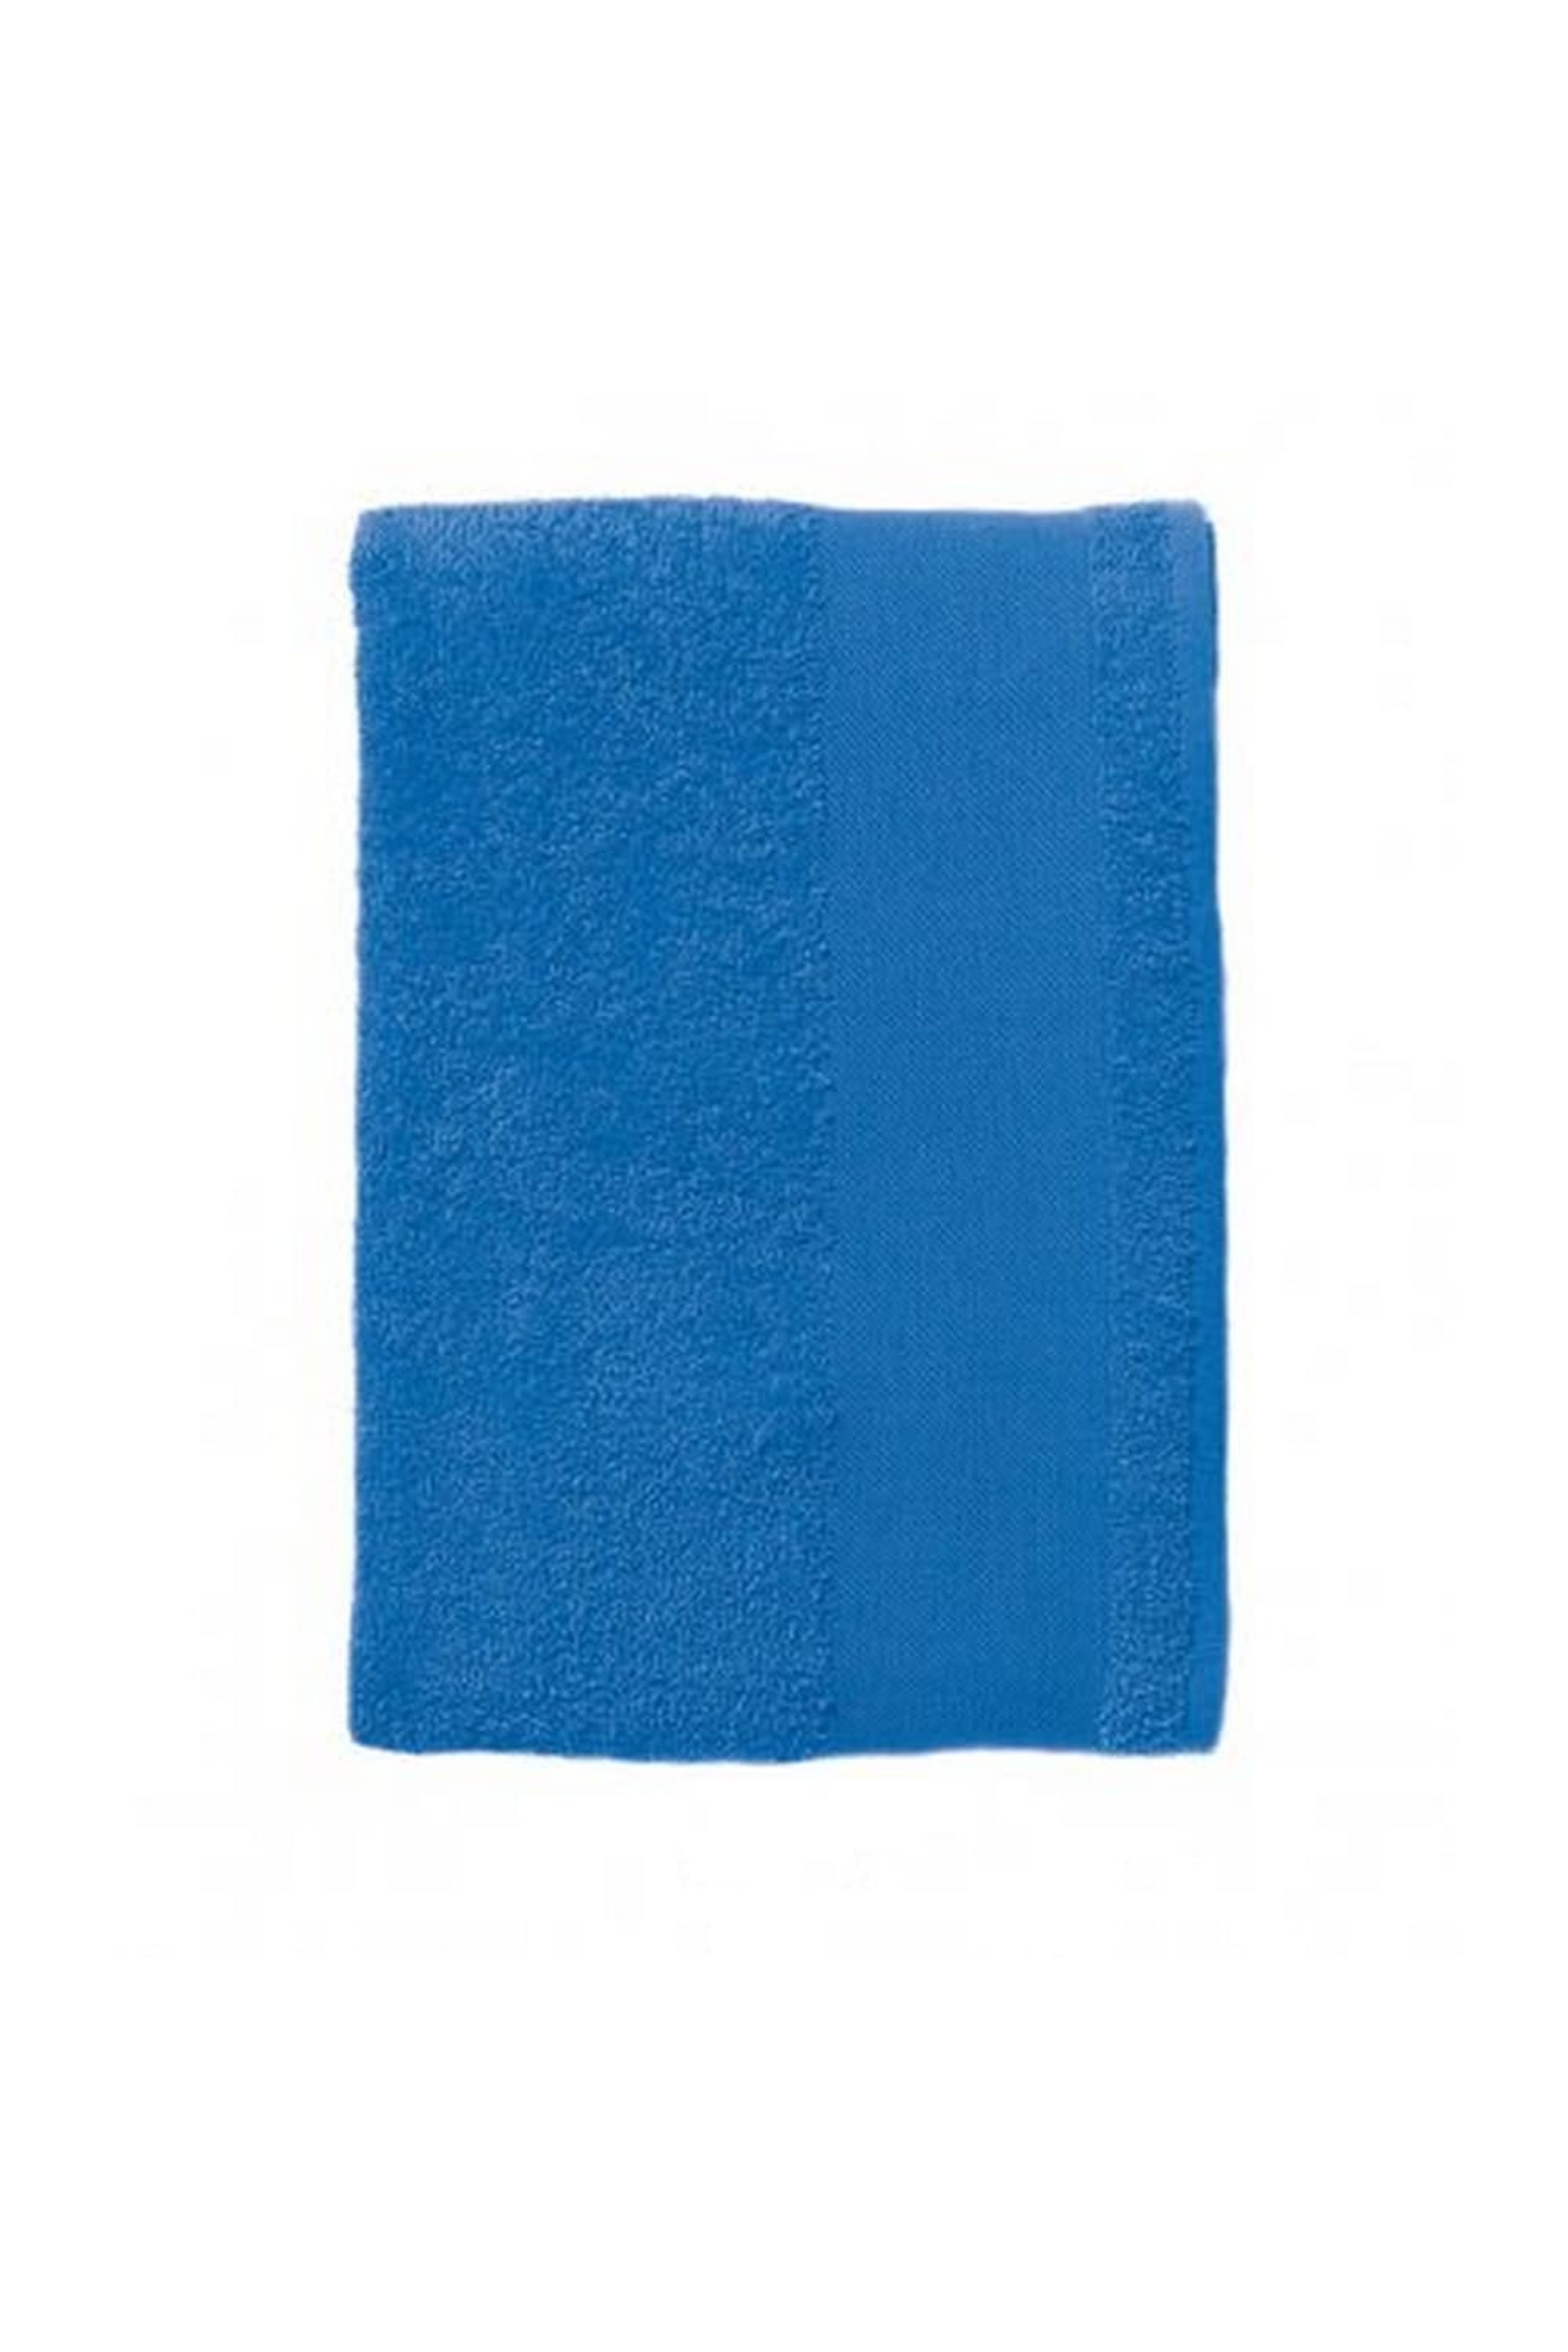 SOLS SOLS SOLS ISLAND 50 HAND TOWEL (20 X 40 INCHES) (ROYAL BLUE) (ONE SIZE)